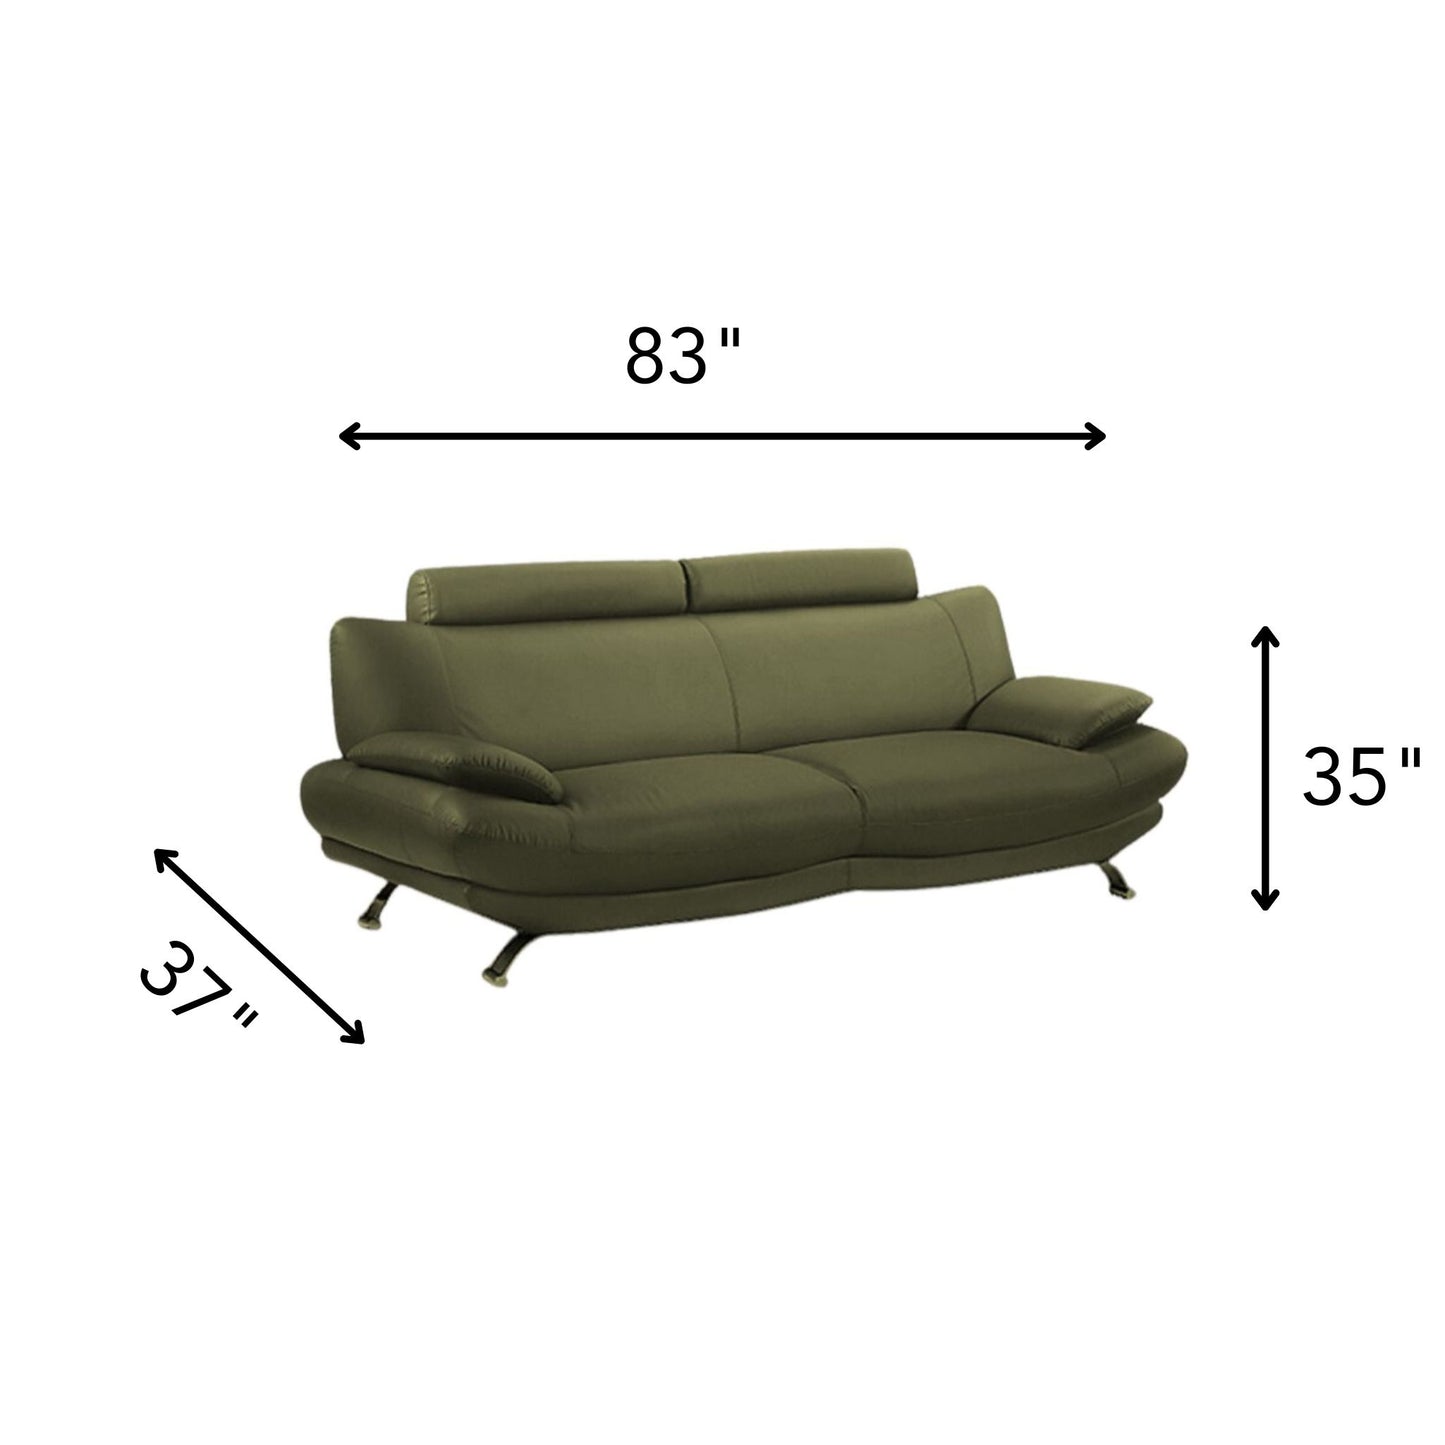 LD-9044-GRAY/SOFA Sofa